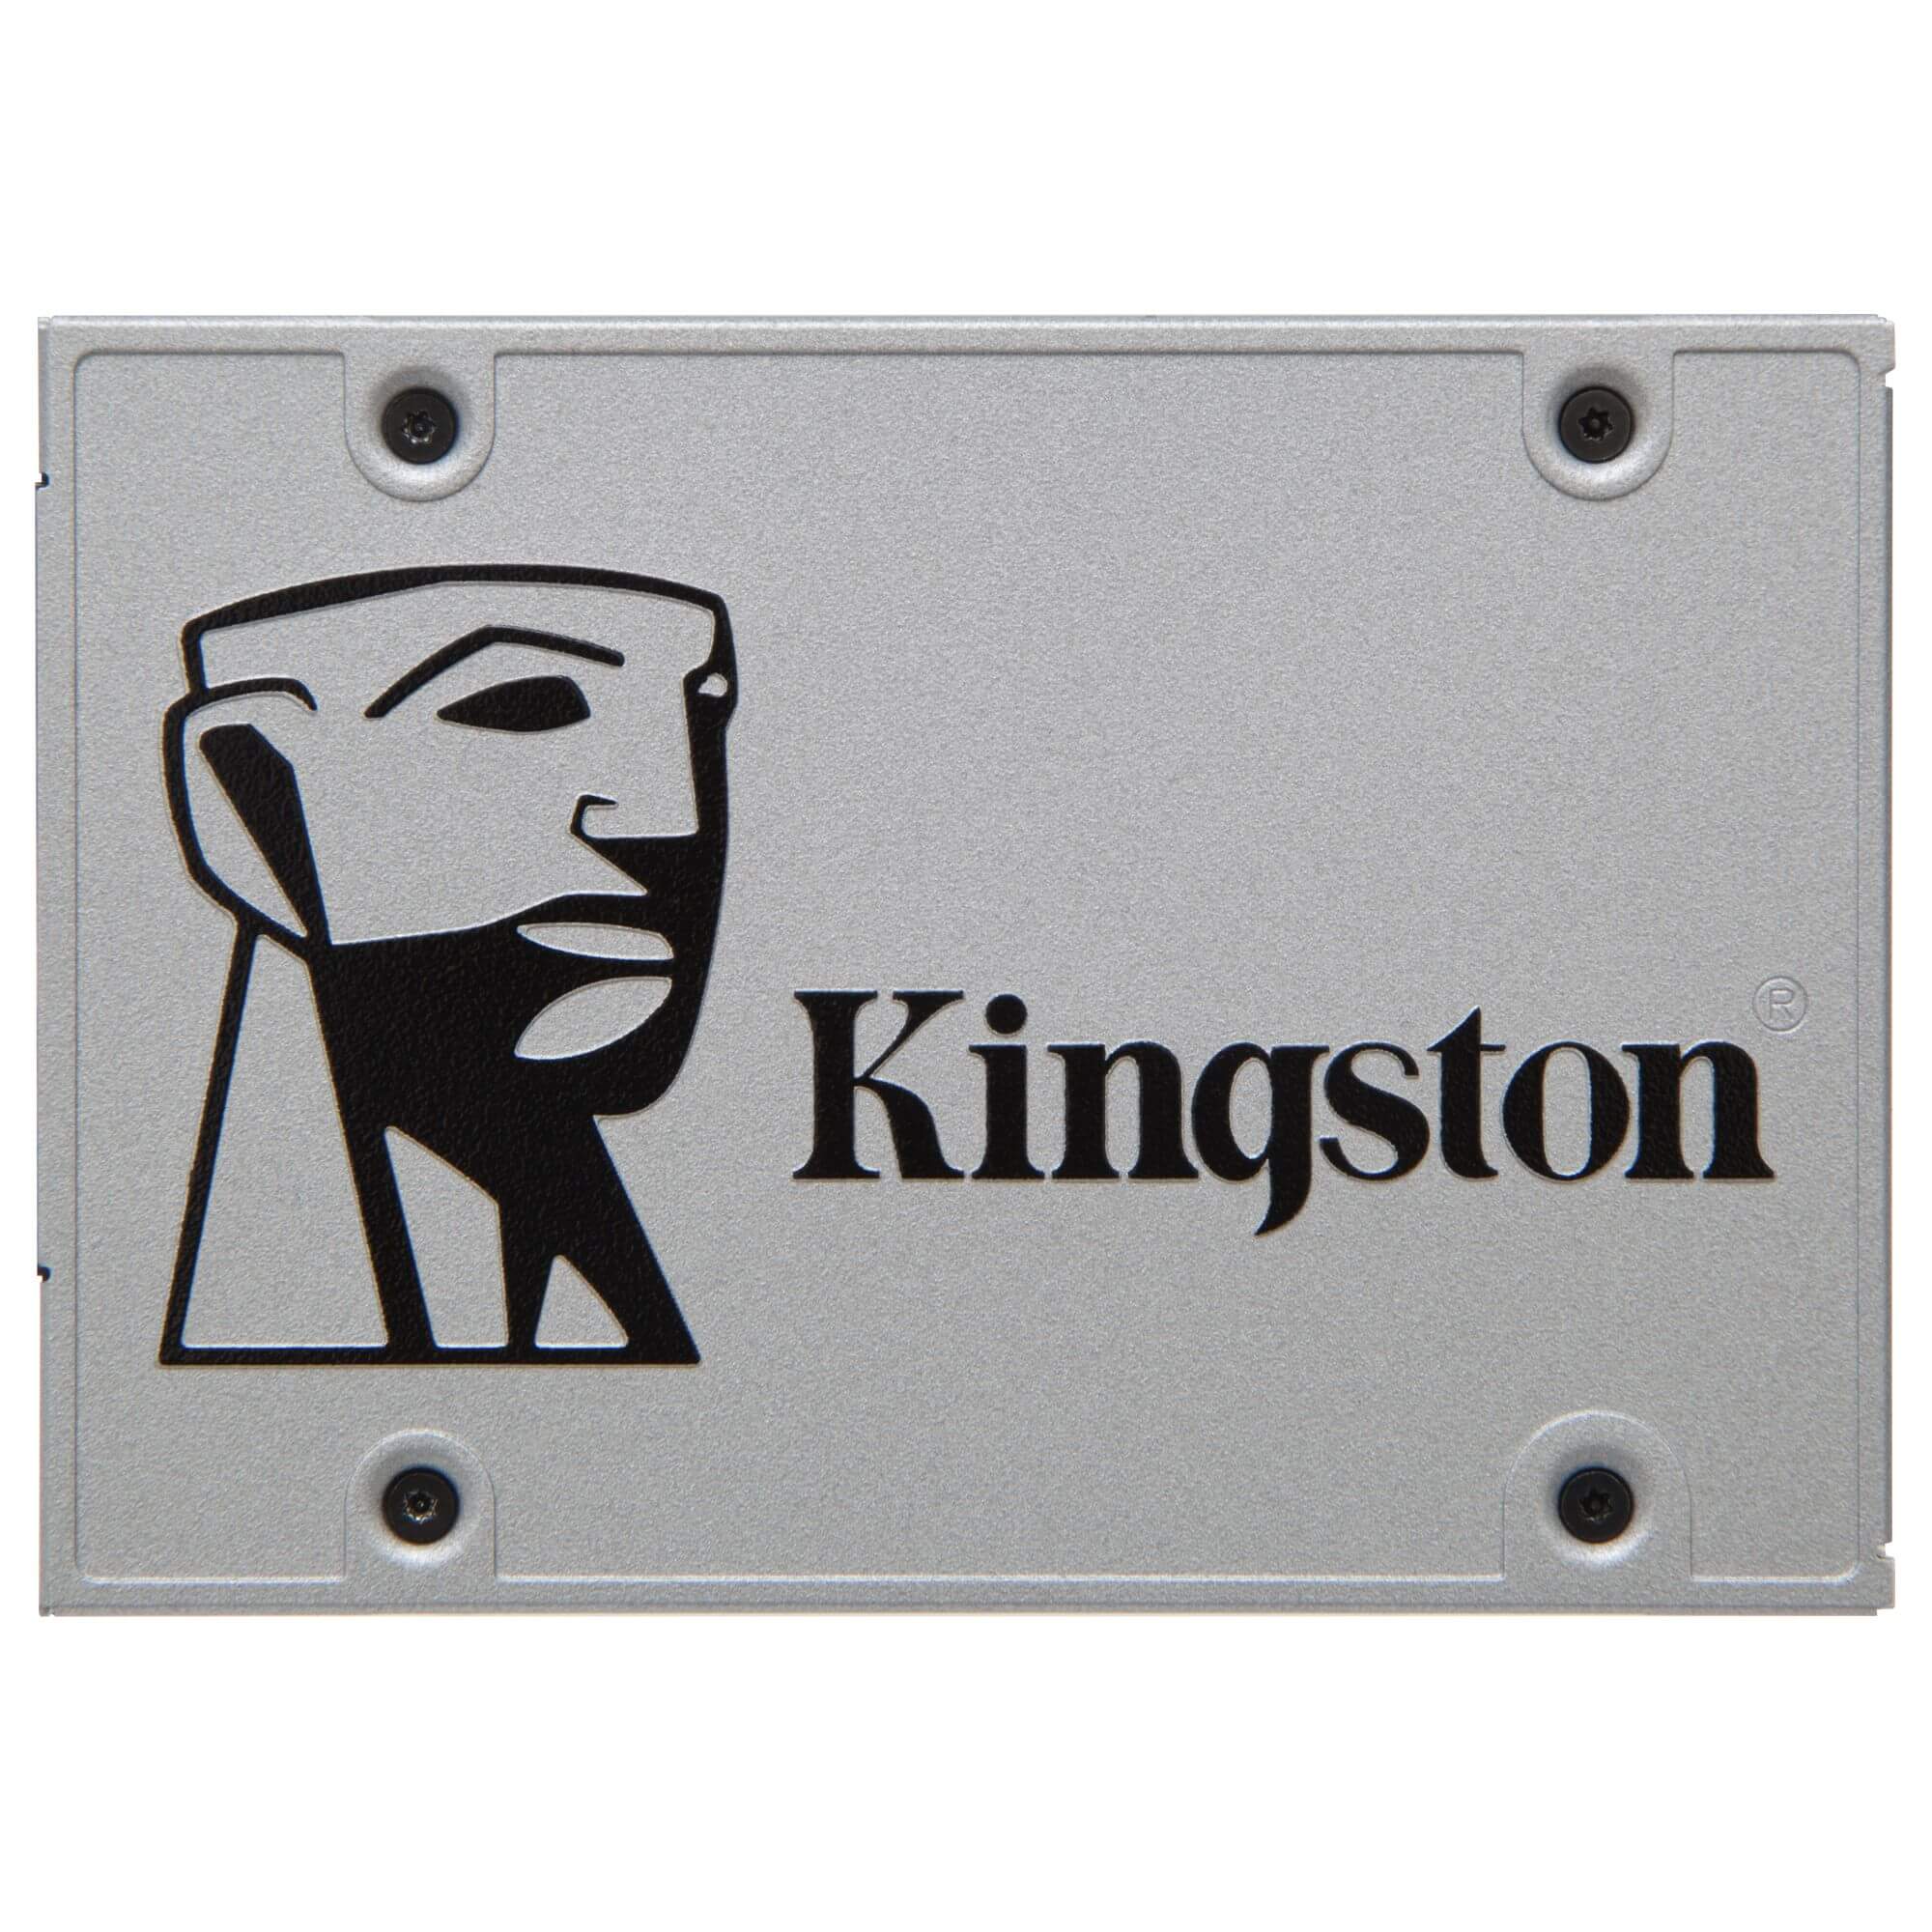 SSD Kingston SSDNow UV400, 480GB, SATA3